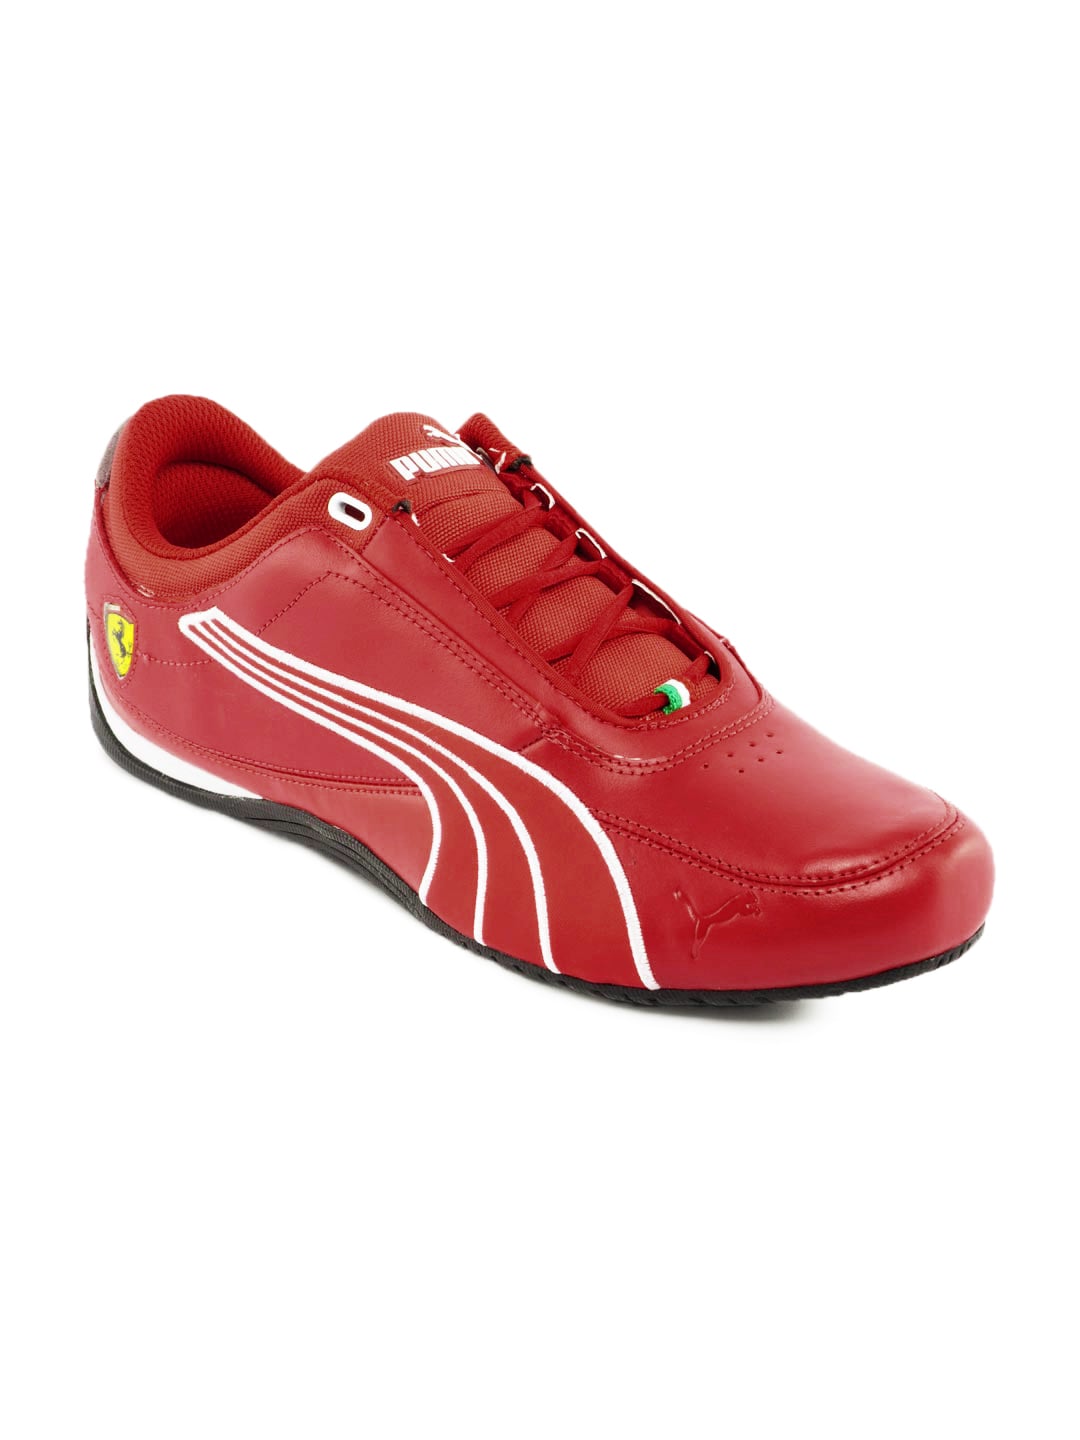 Puma Men Drift Red Casual Shoes